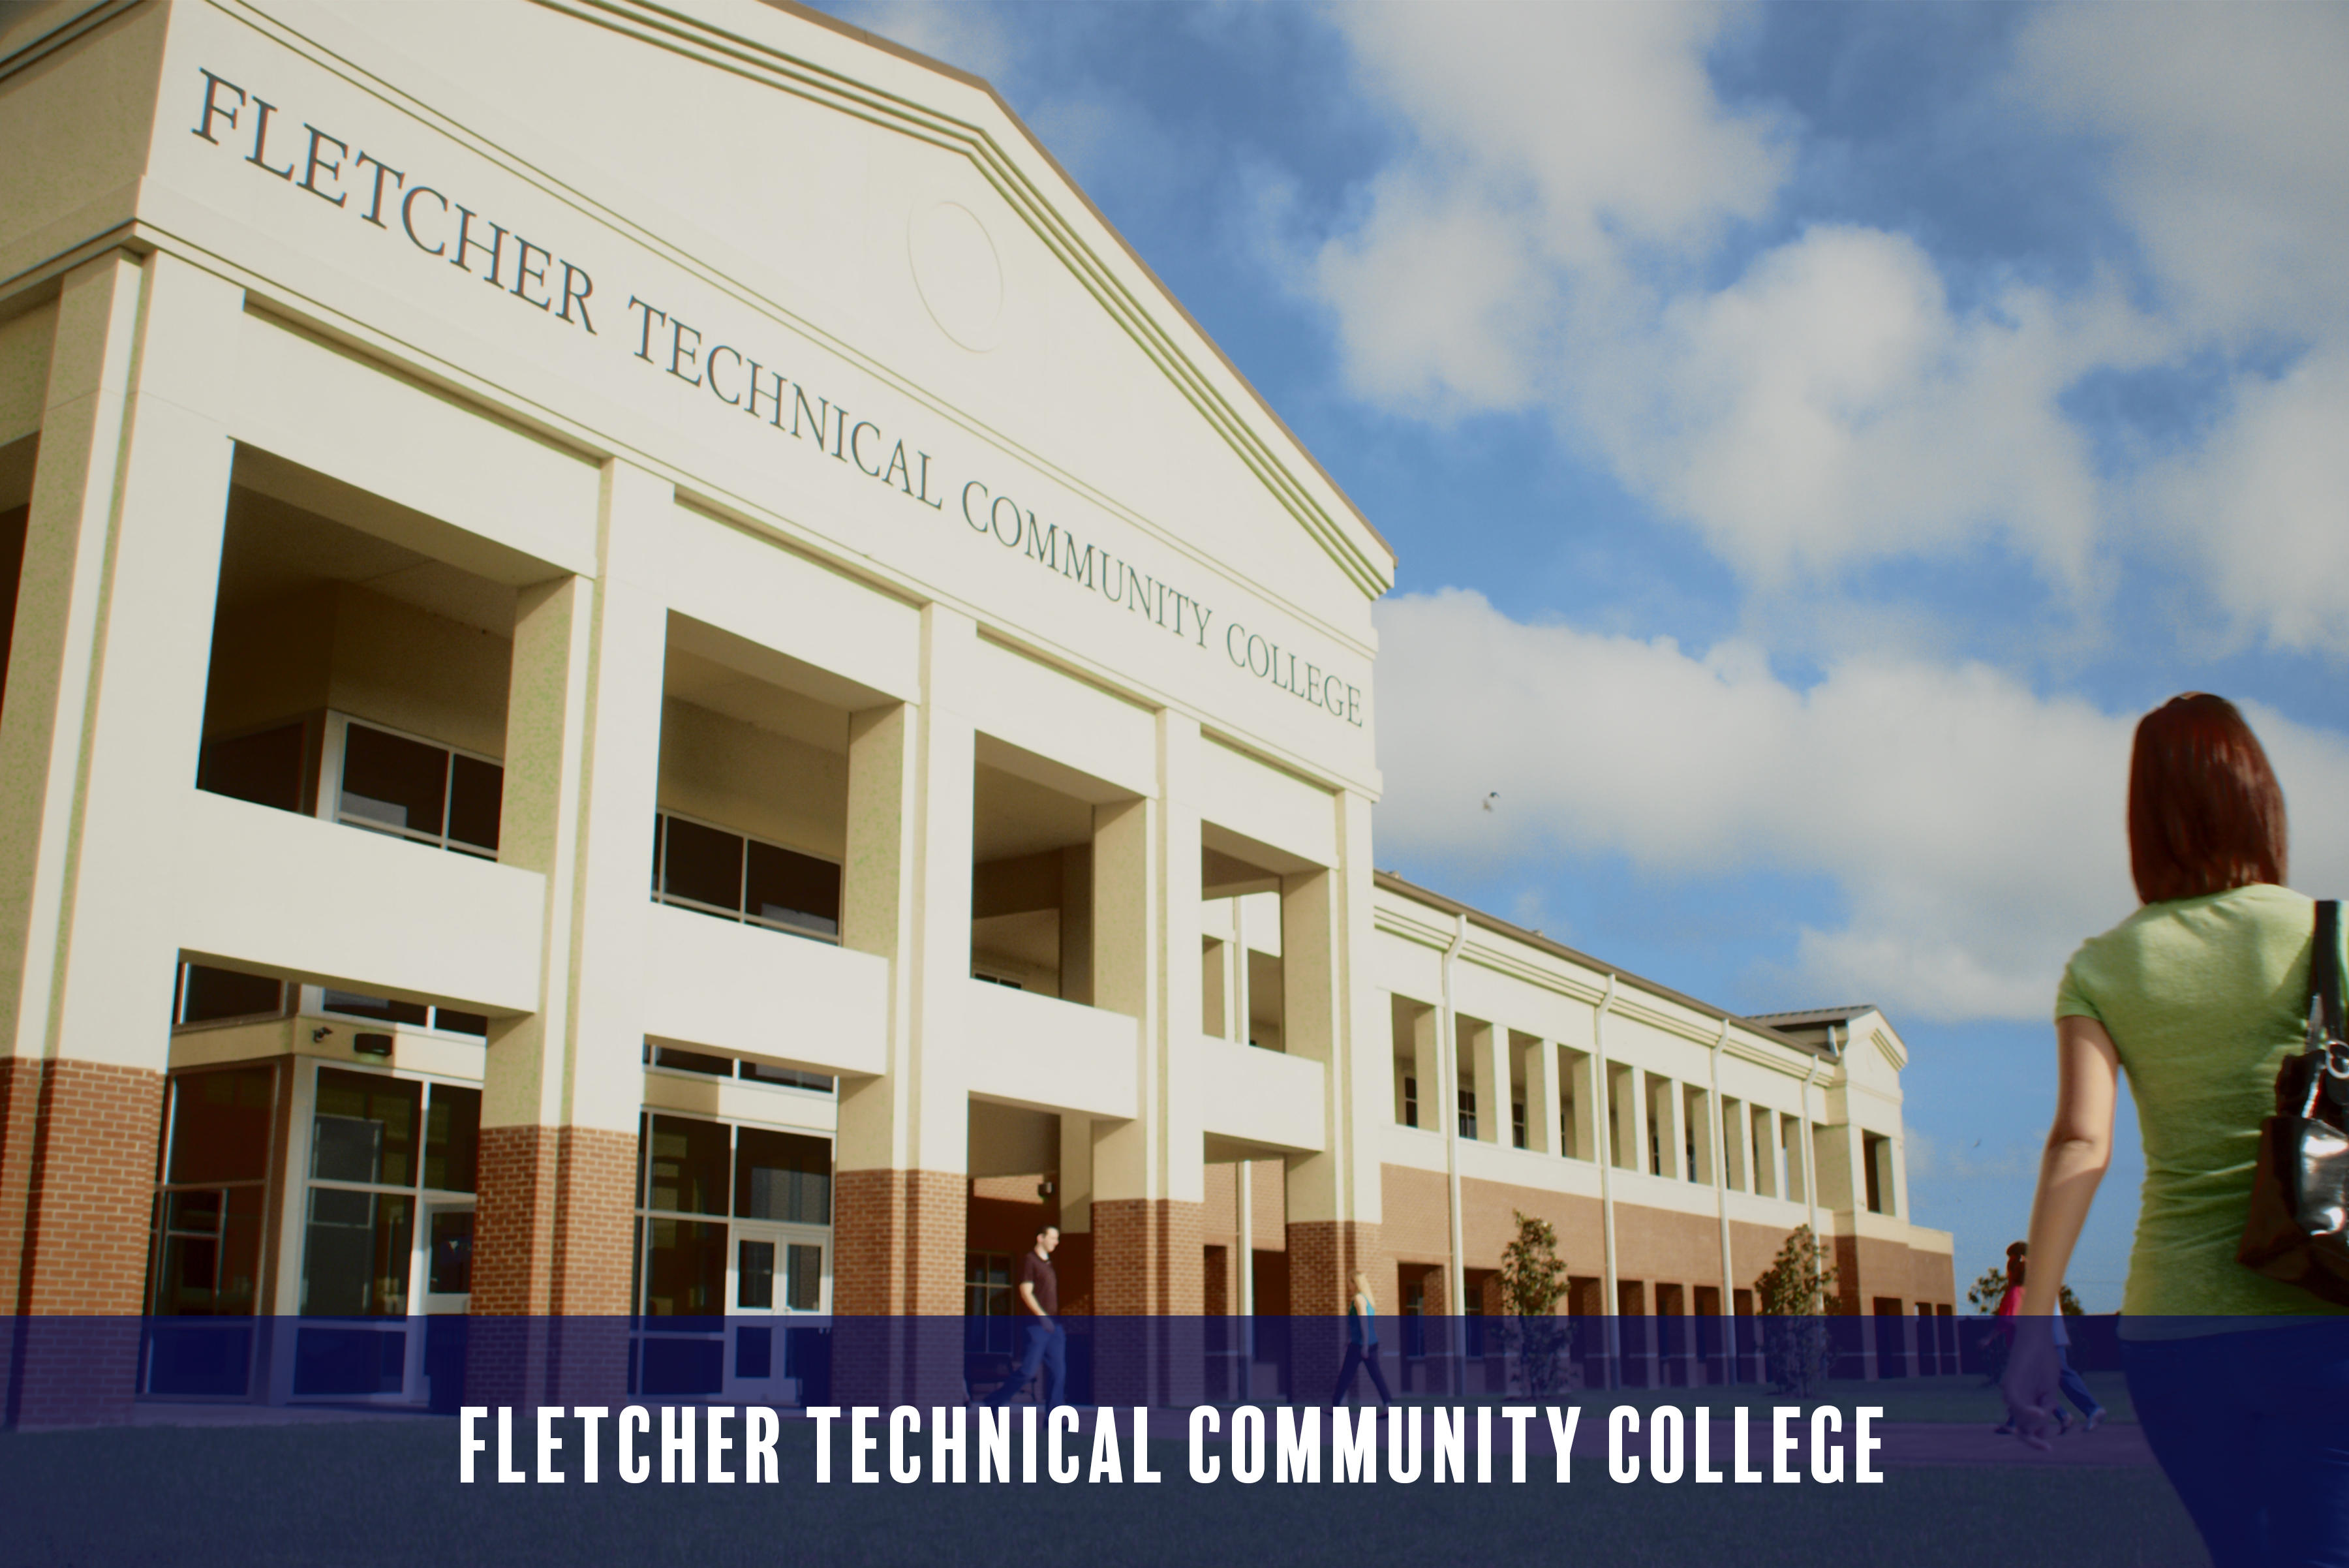 Fletcher Technical Community College